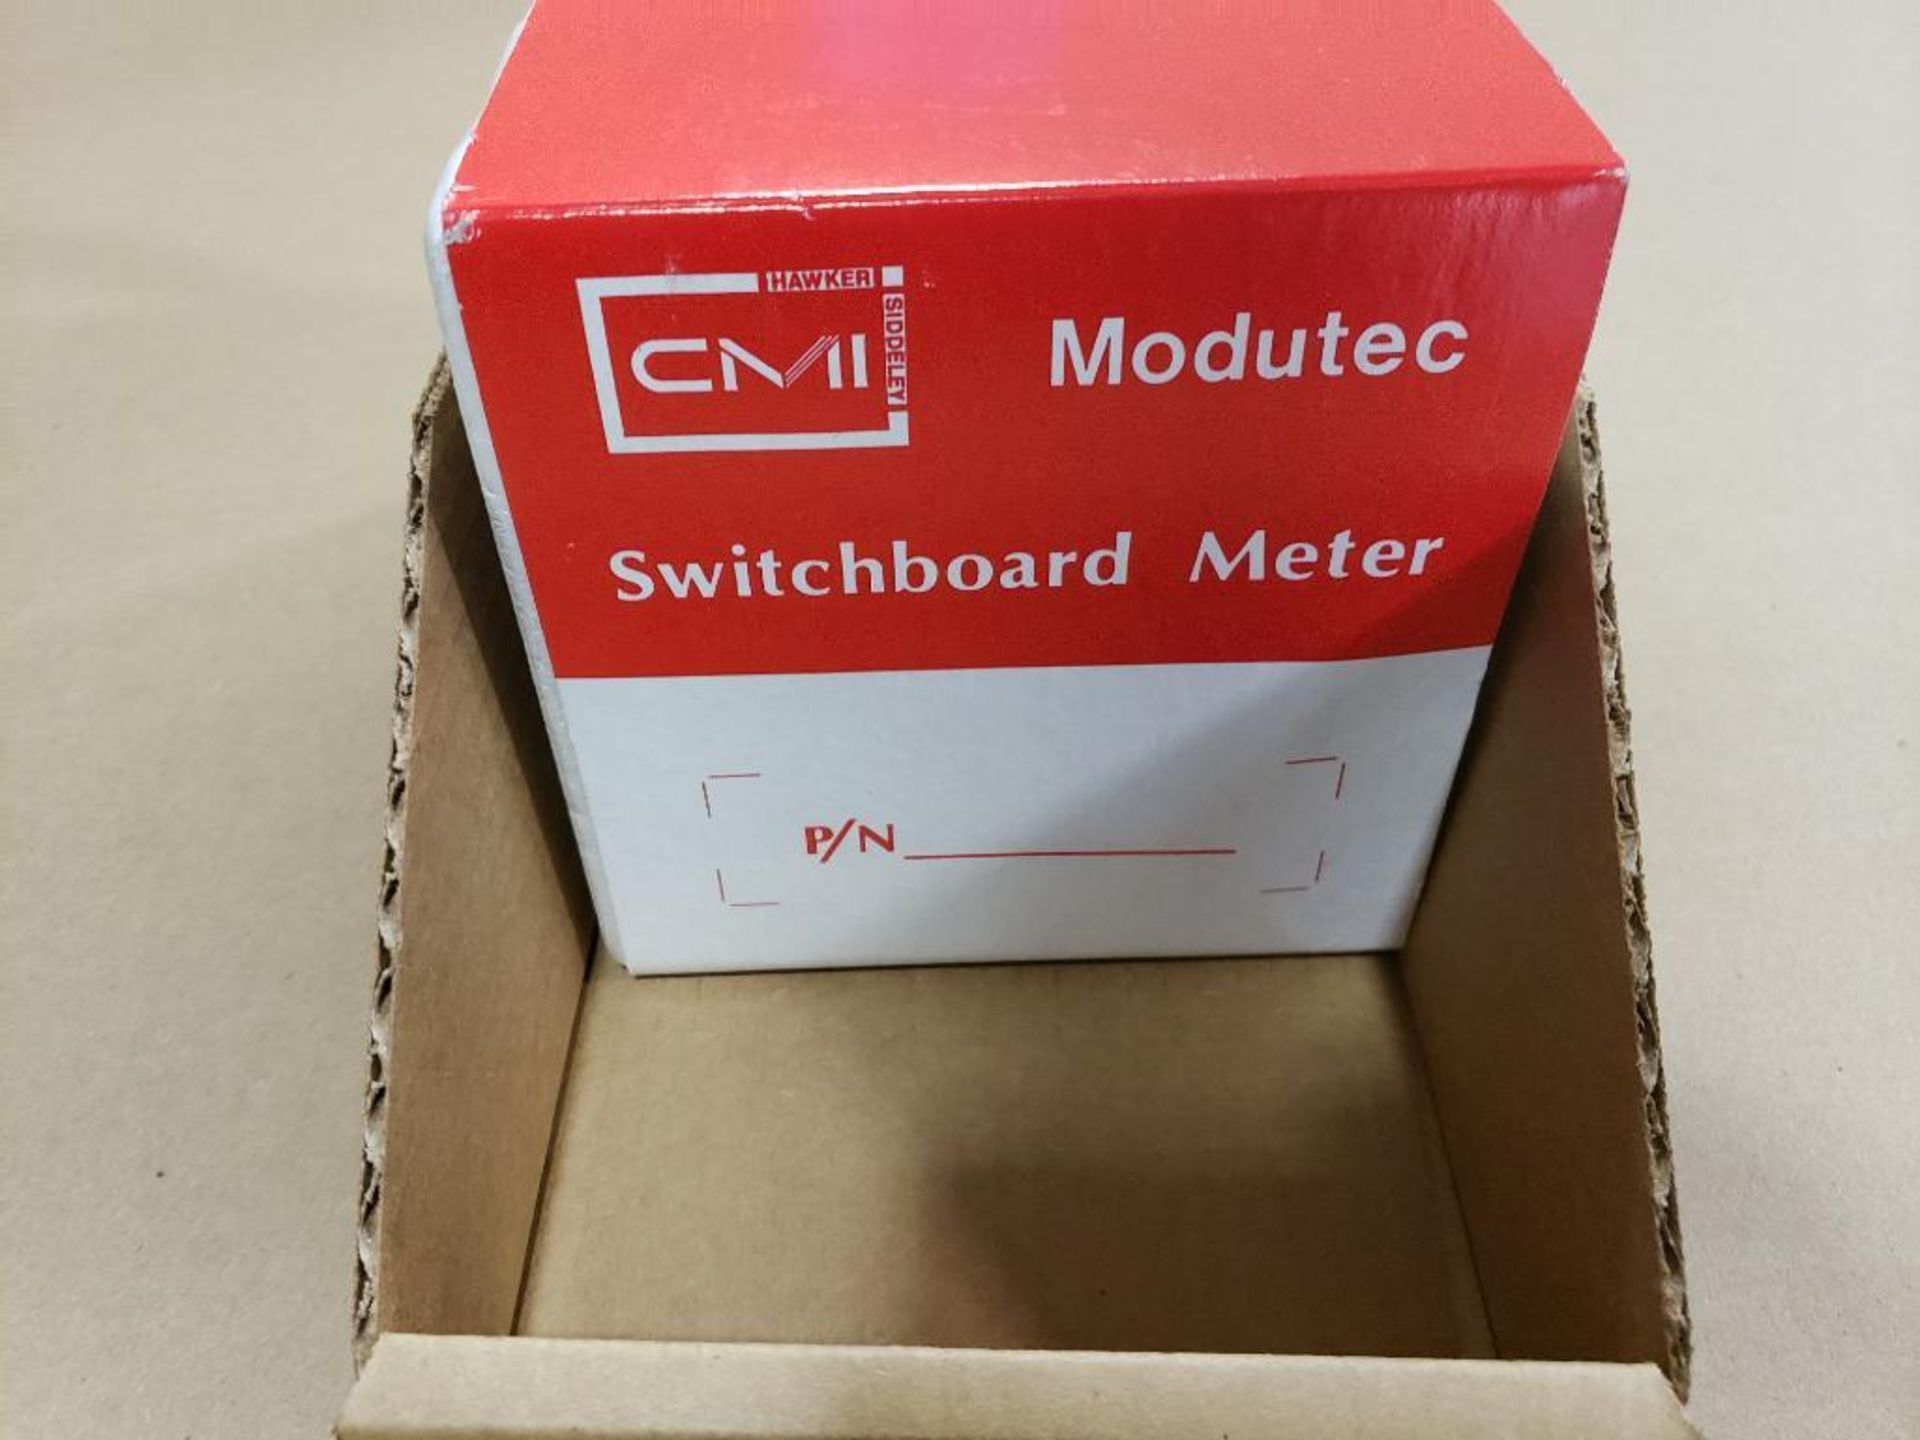 CMI Modutec switchboard meter. New in box. - Image 2 of 4